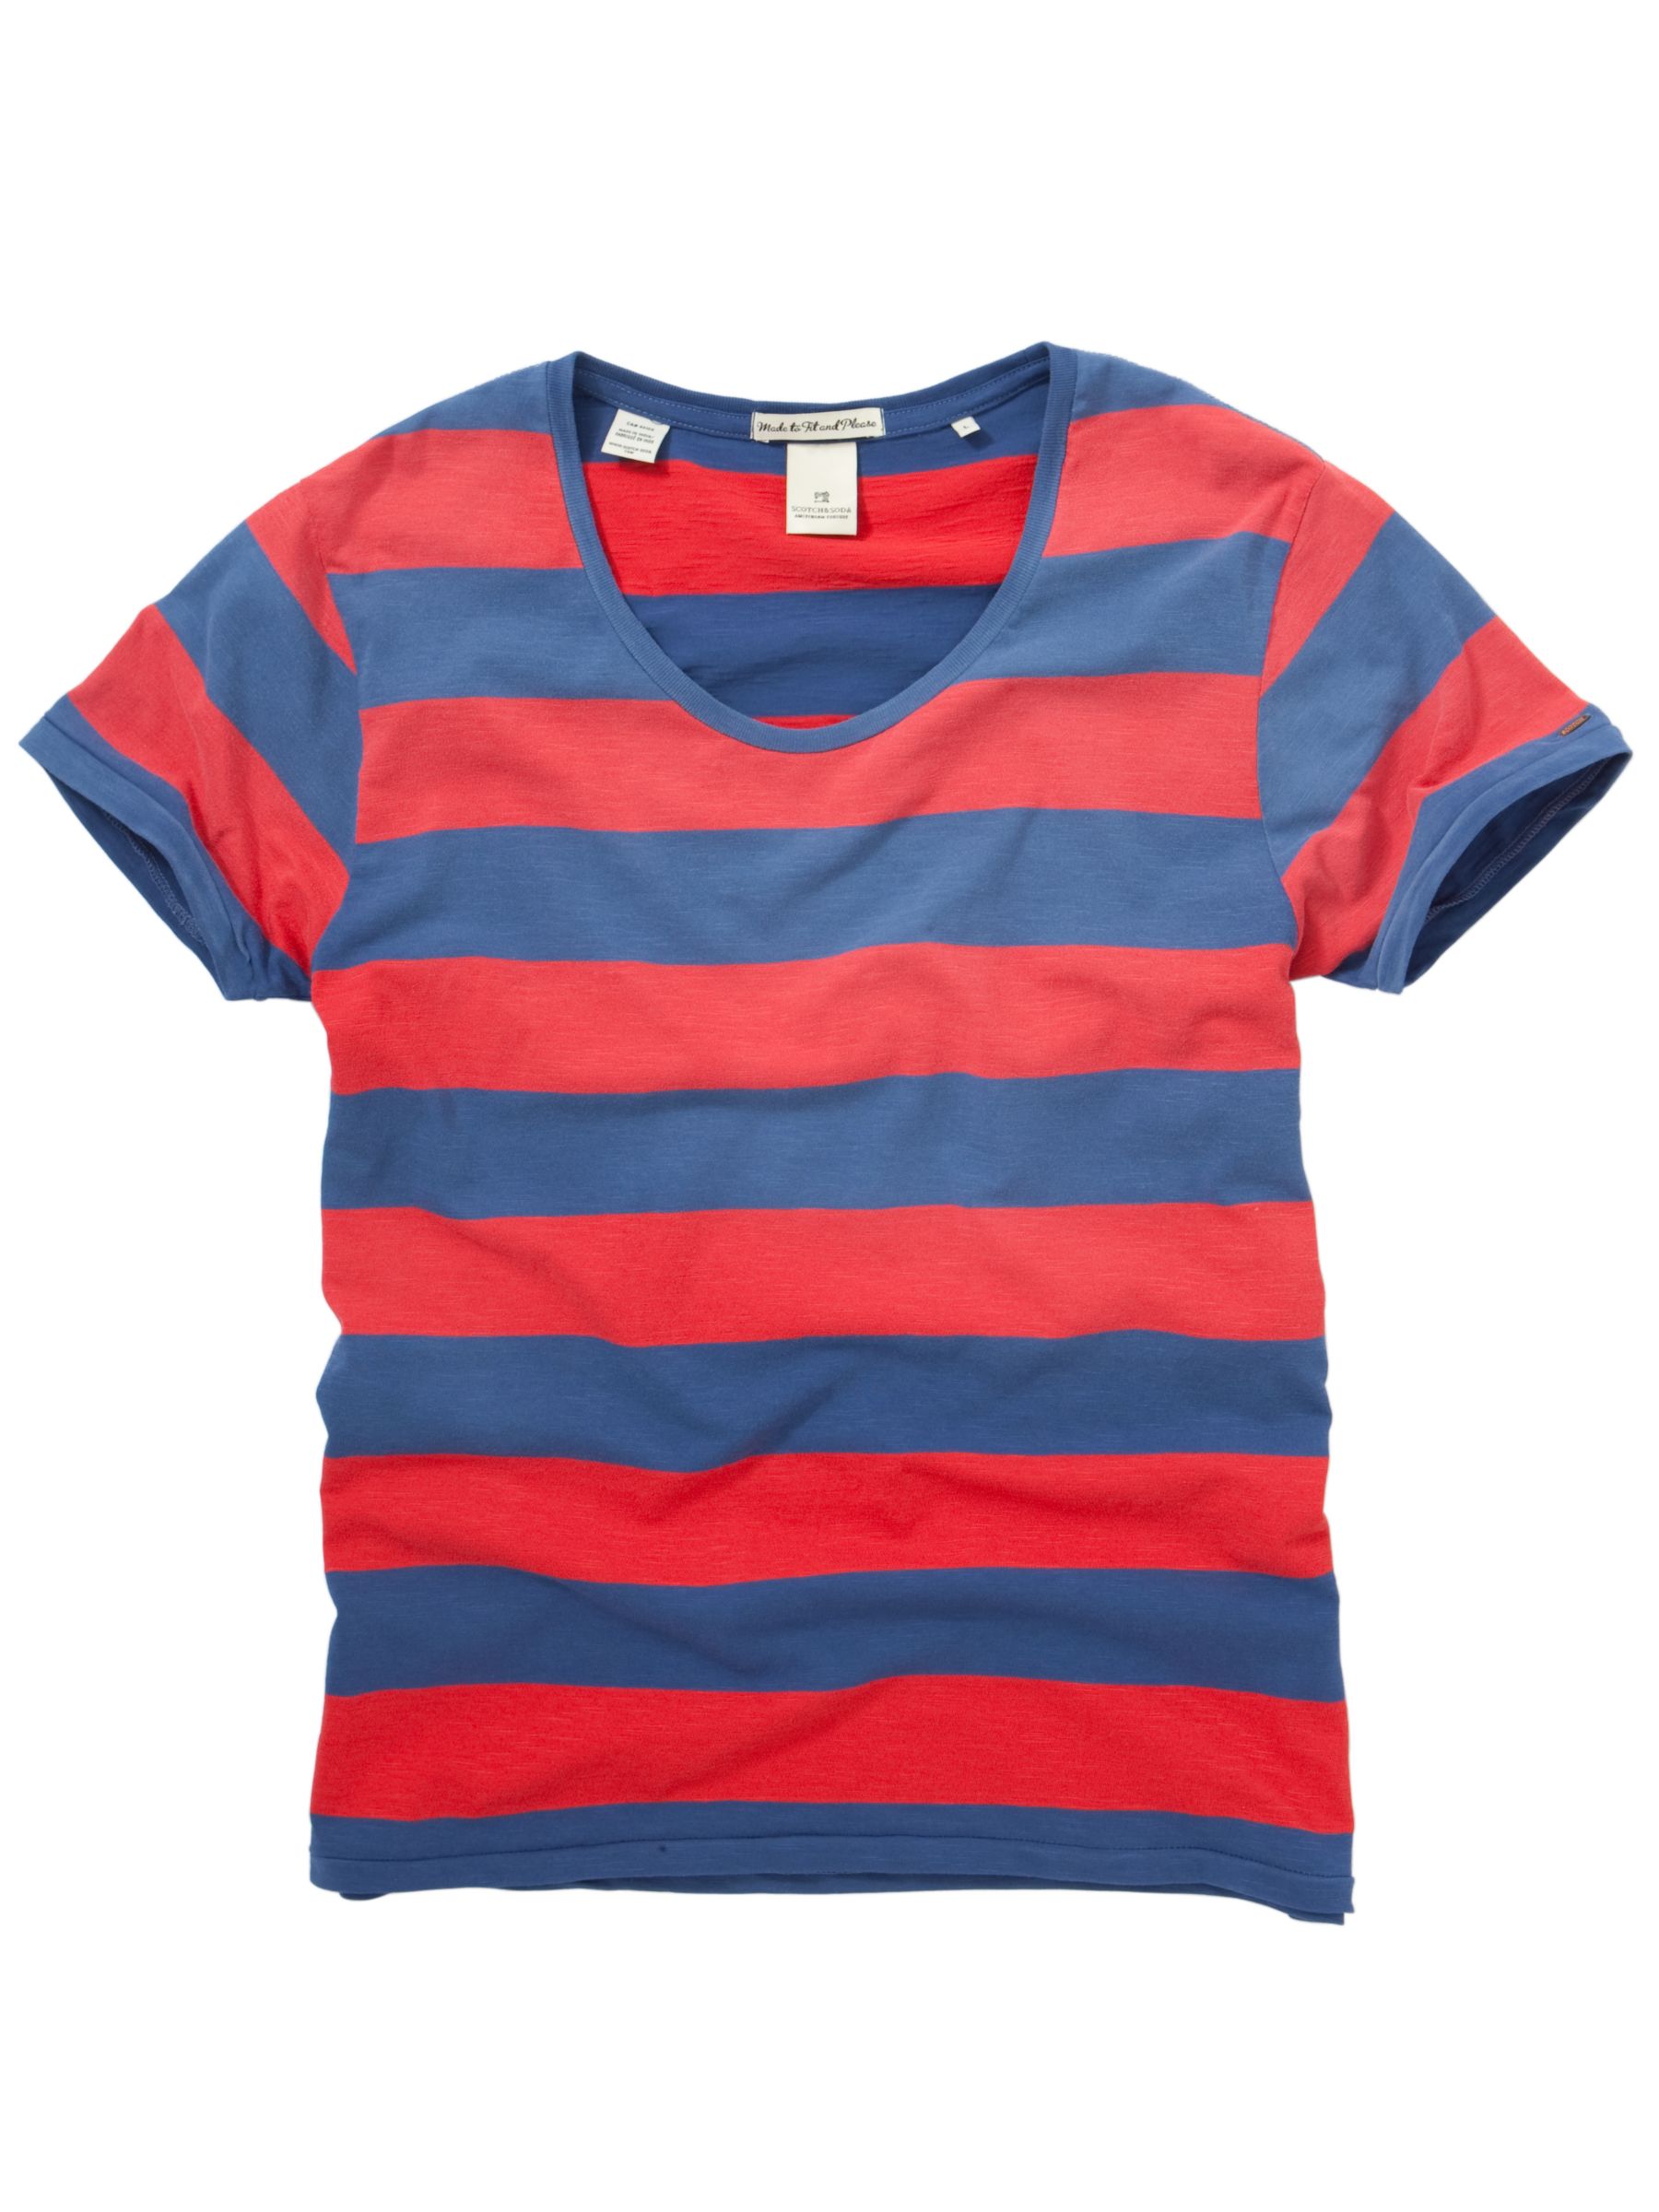 Scotch and Soda Block Stripe T-Shirt, Red/navy